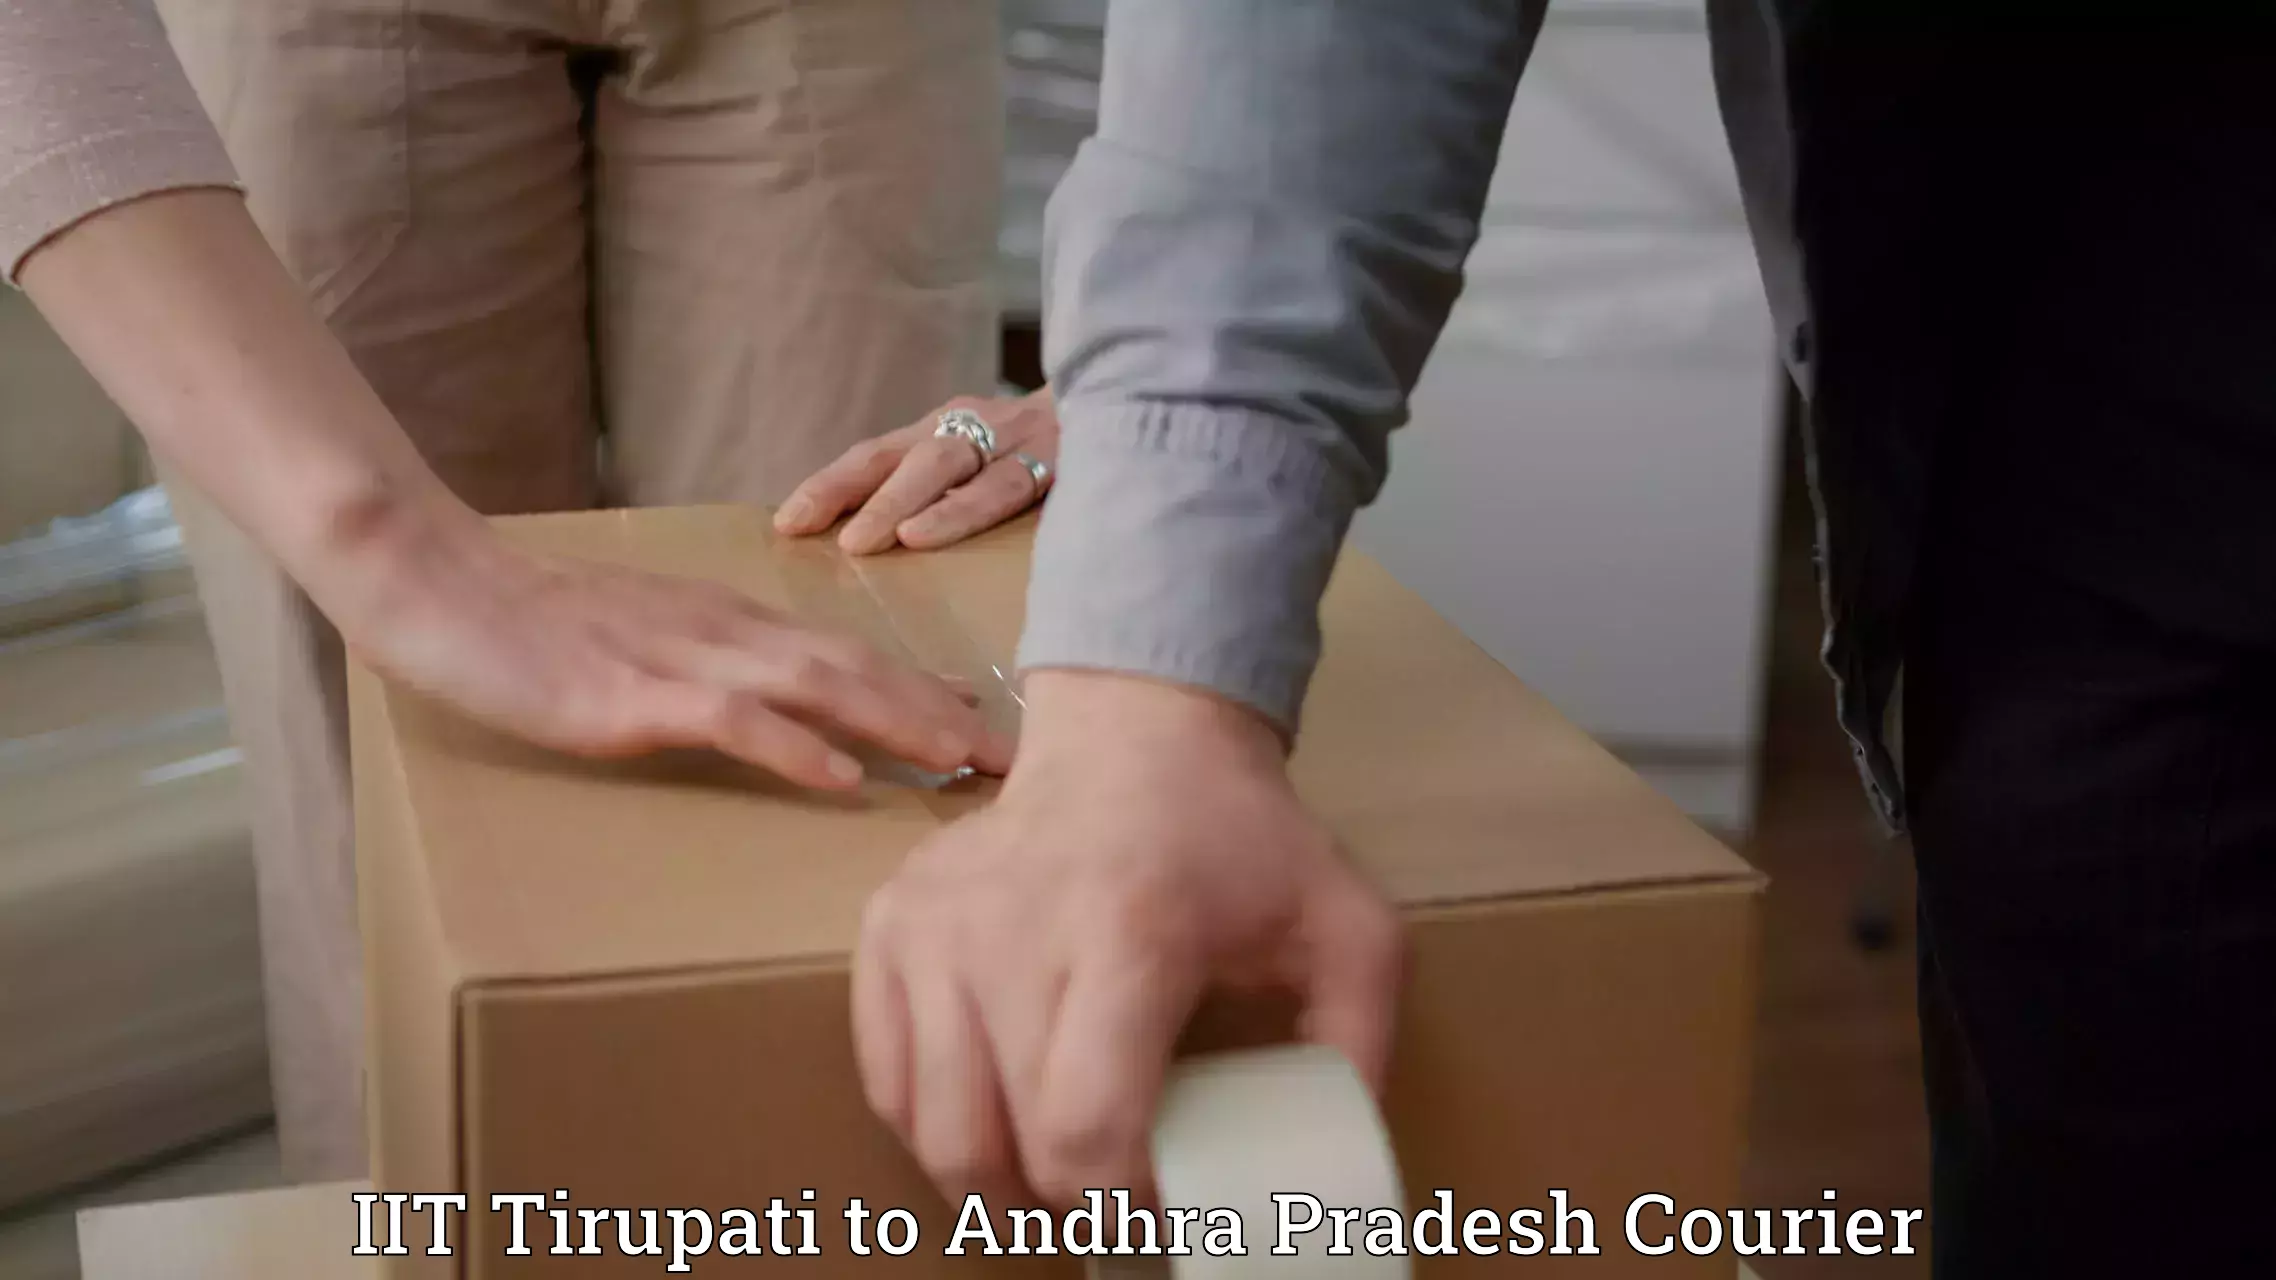 Global courier networks IIT Tirupati to East Godavari